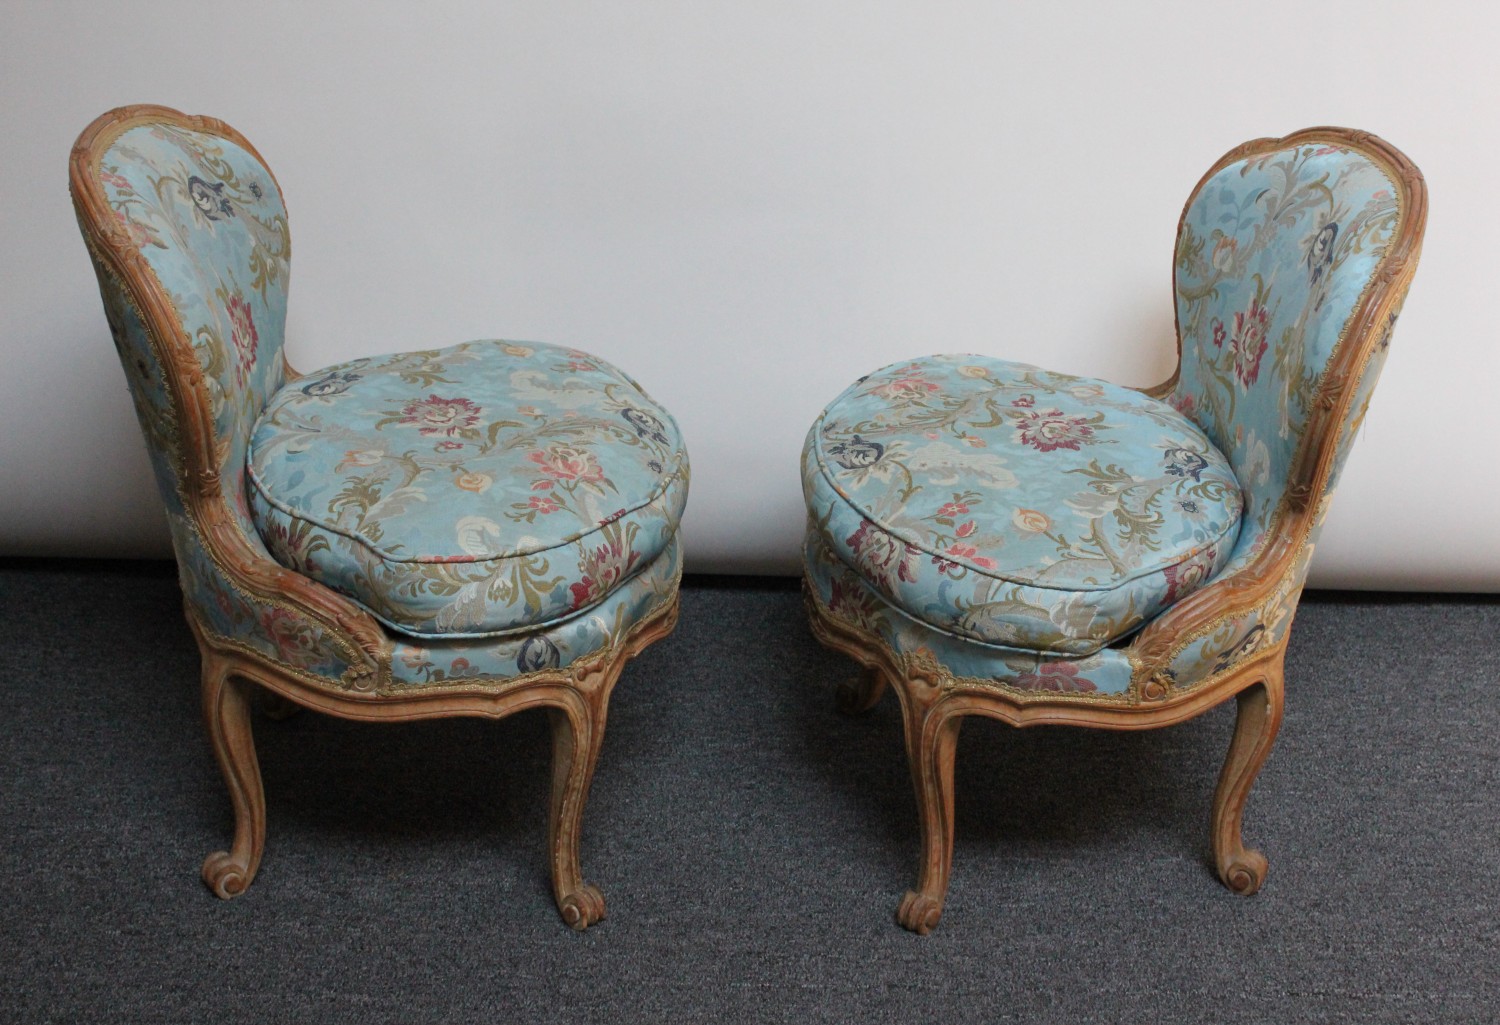 Pair of Diminutive French Louis XV Rococo Boudoir Slipper Chairs